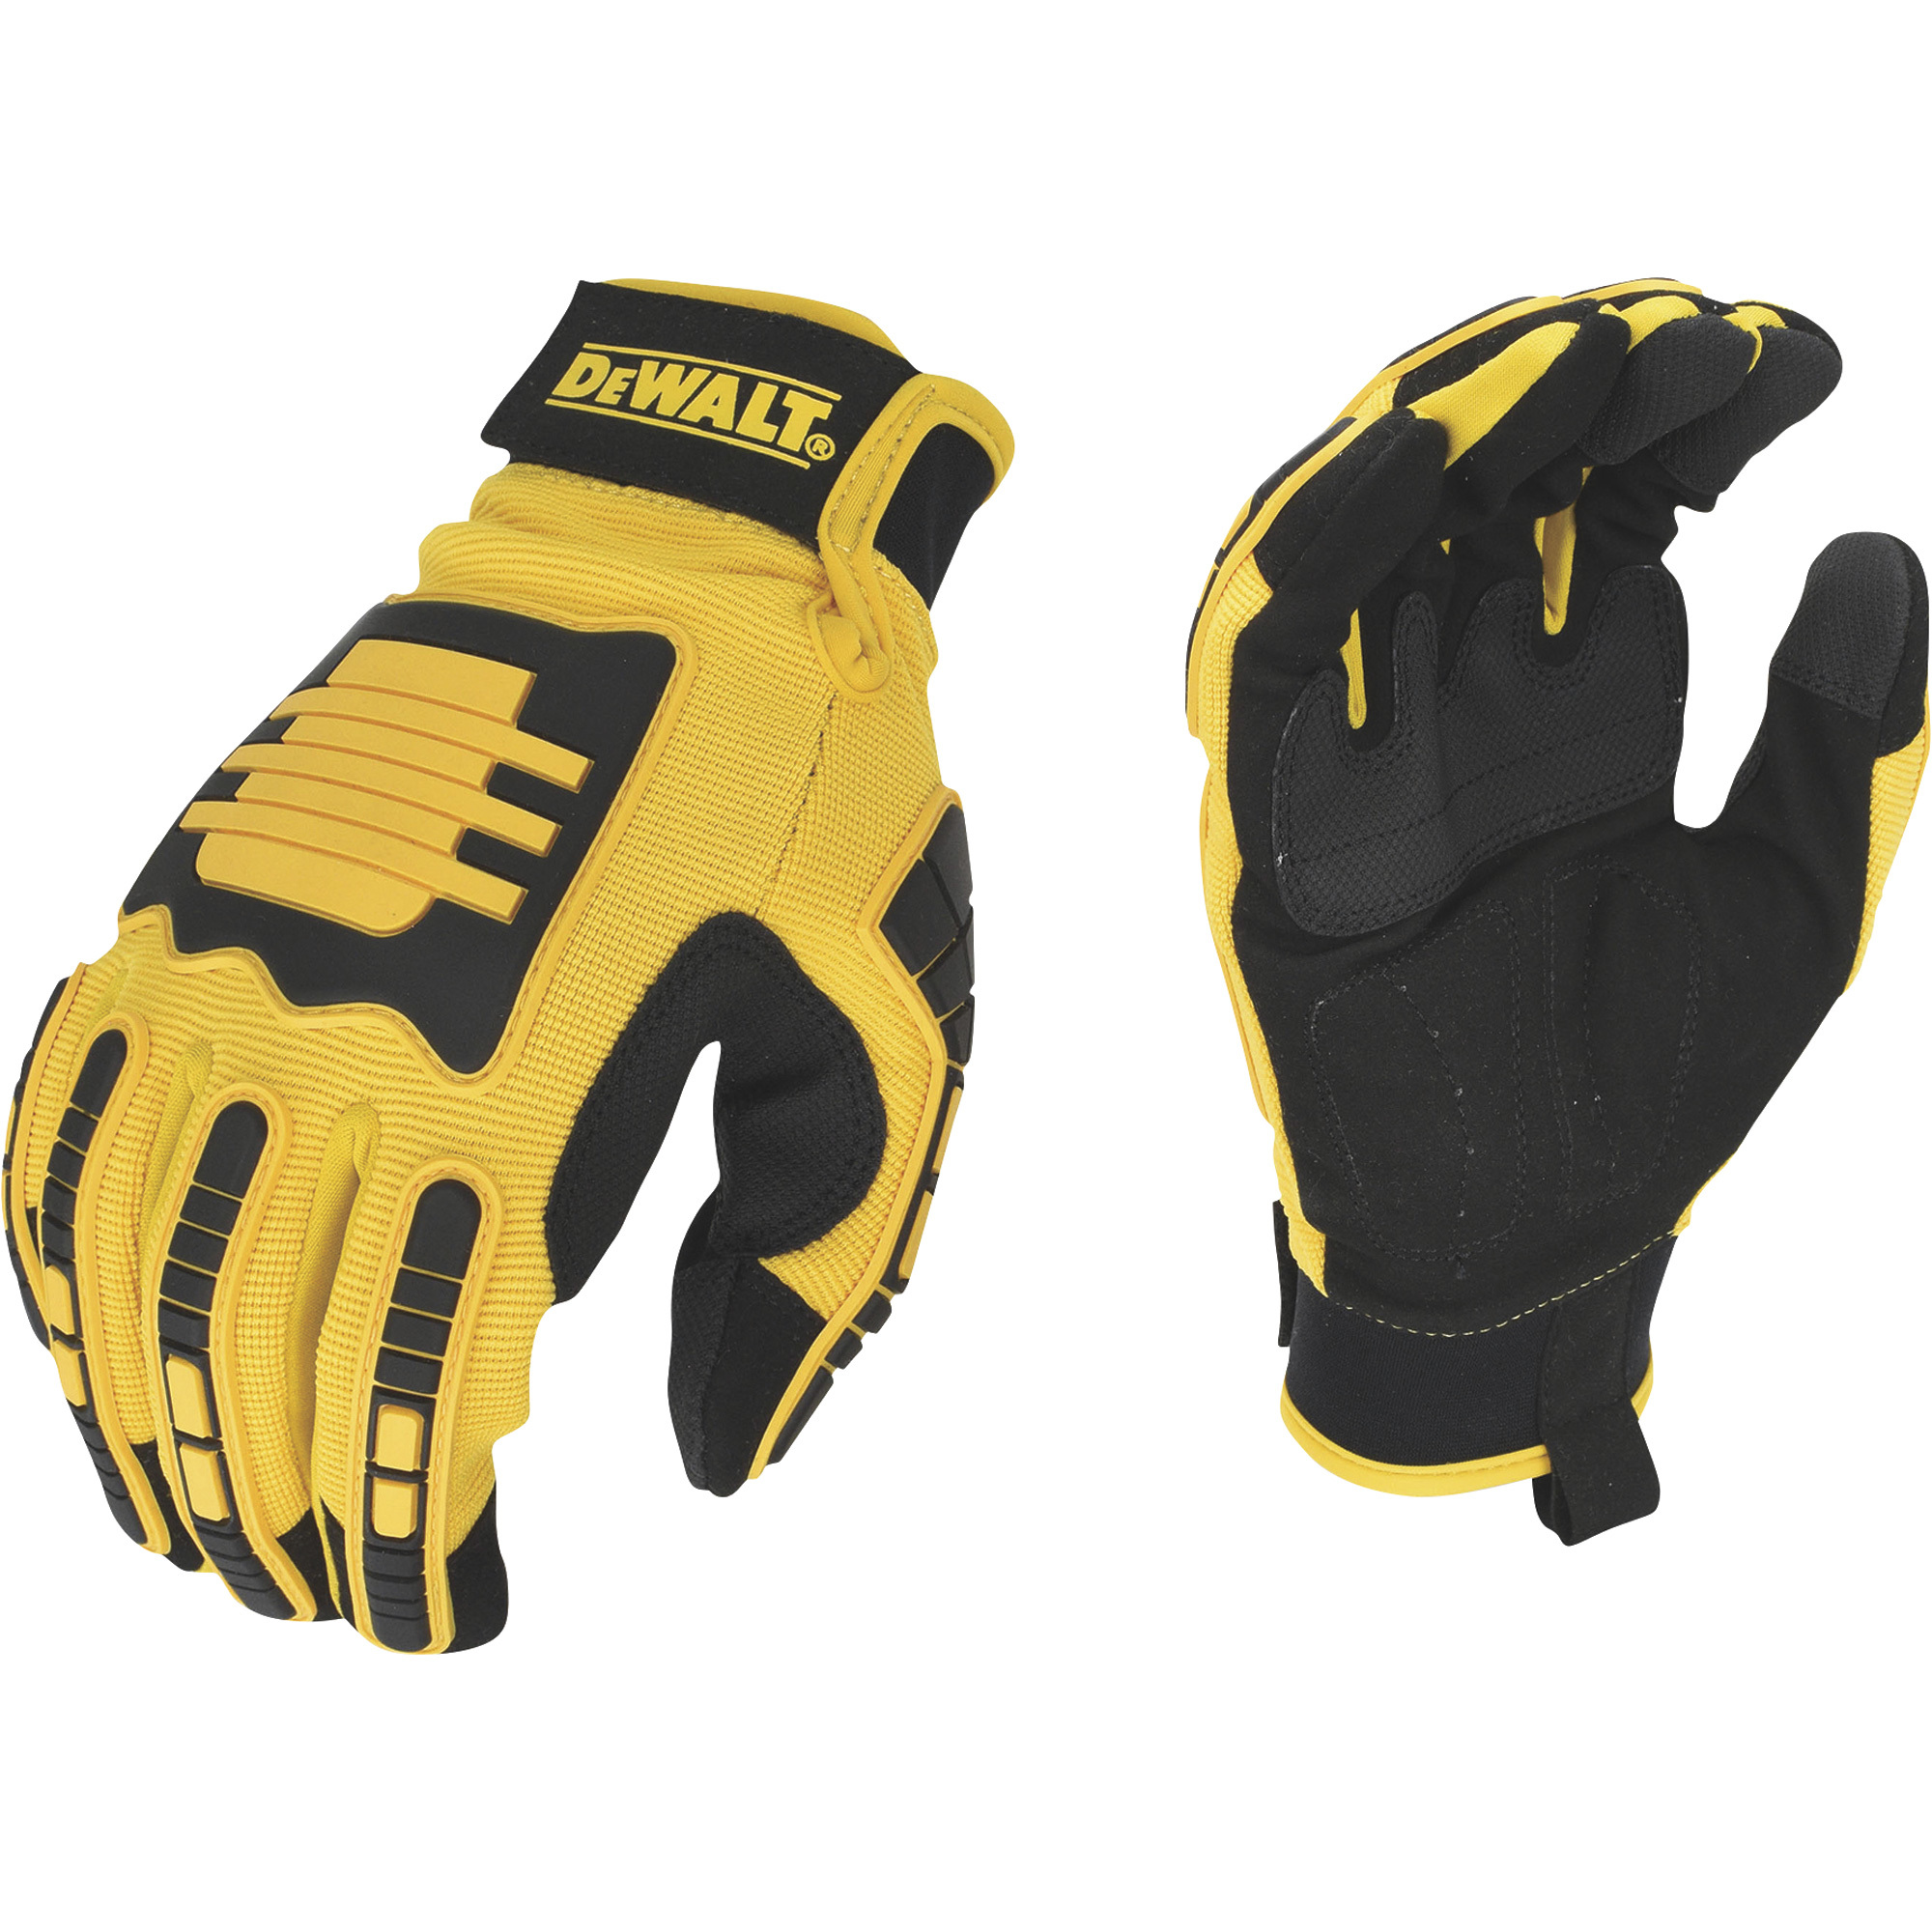 DEWALT Men's Impact Mechanic's Gloves â 1 Pair, Yellow/Black, Large, Model DPG781L